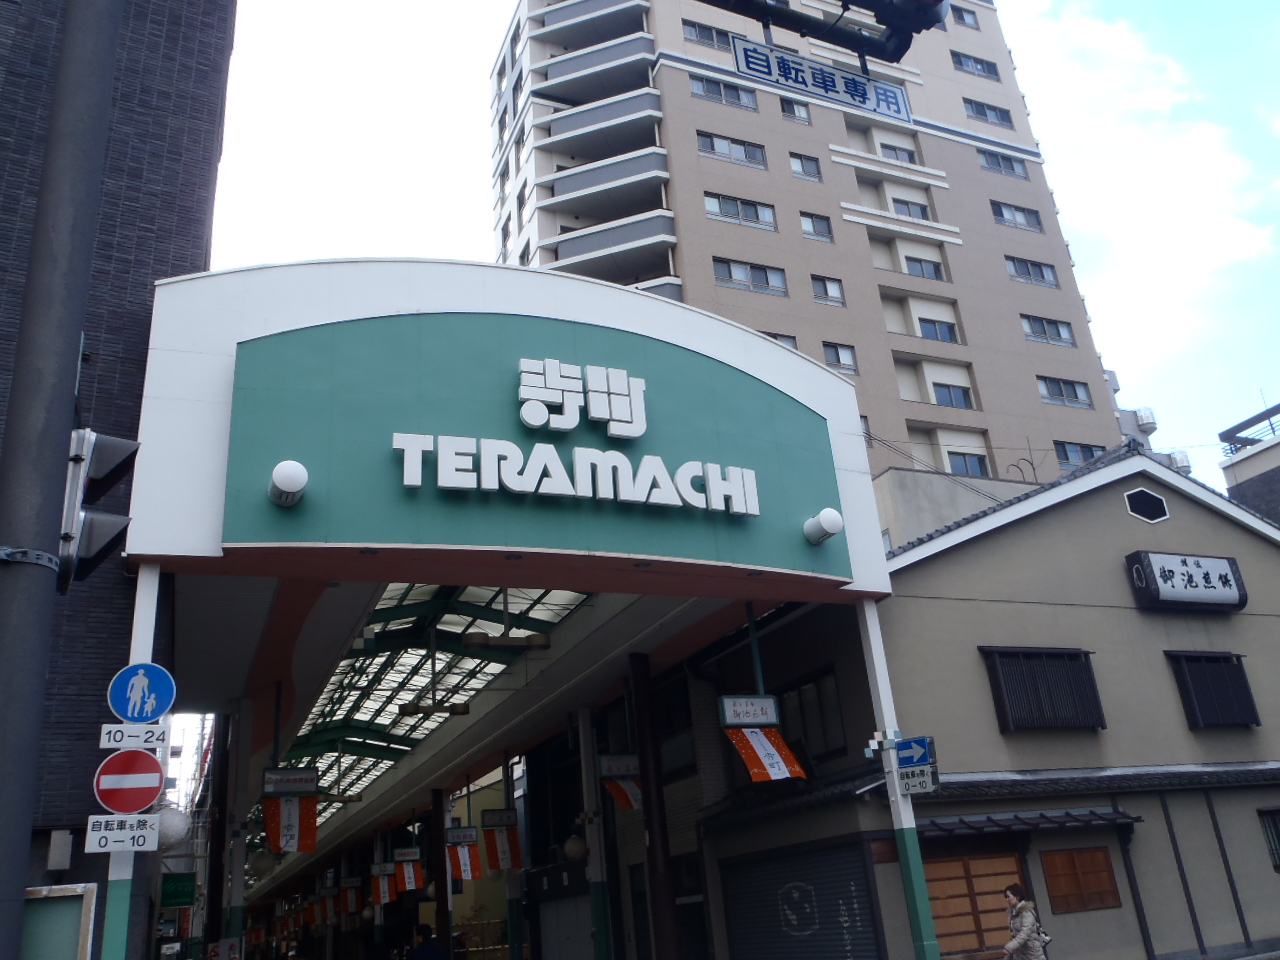 Shopping centre. 250m to Teramachi shopping street (shopping center)